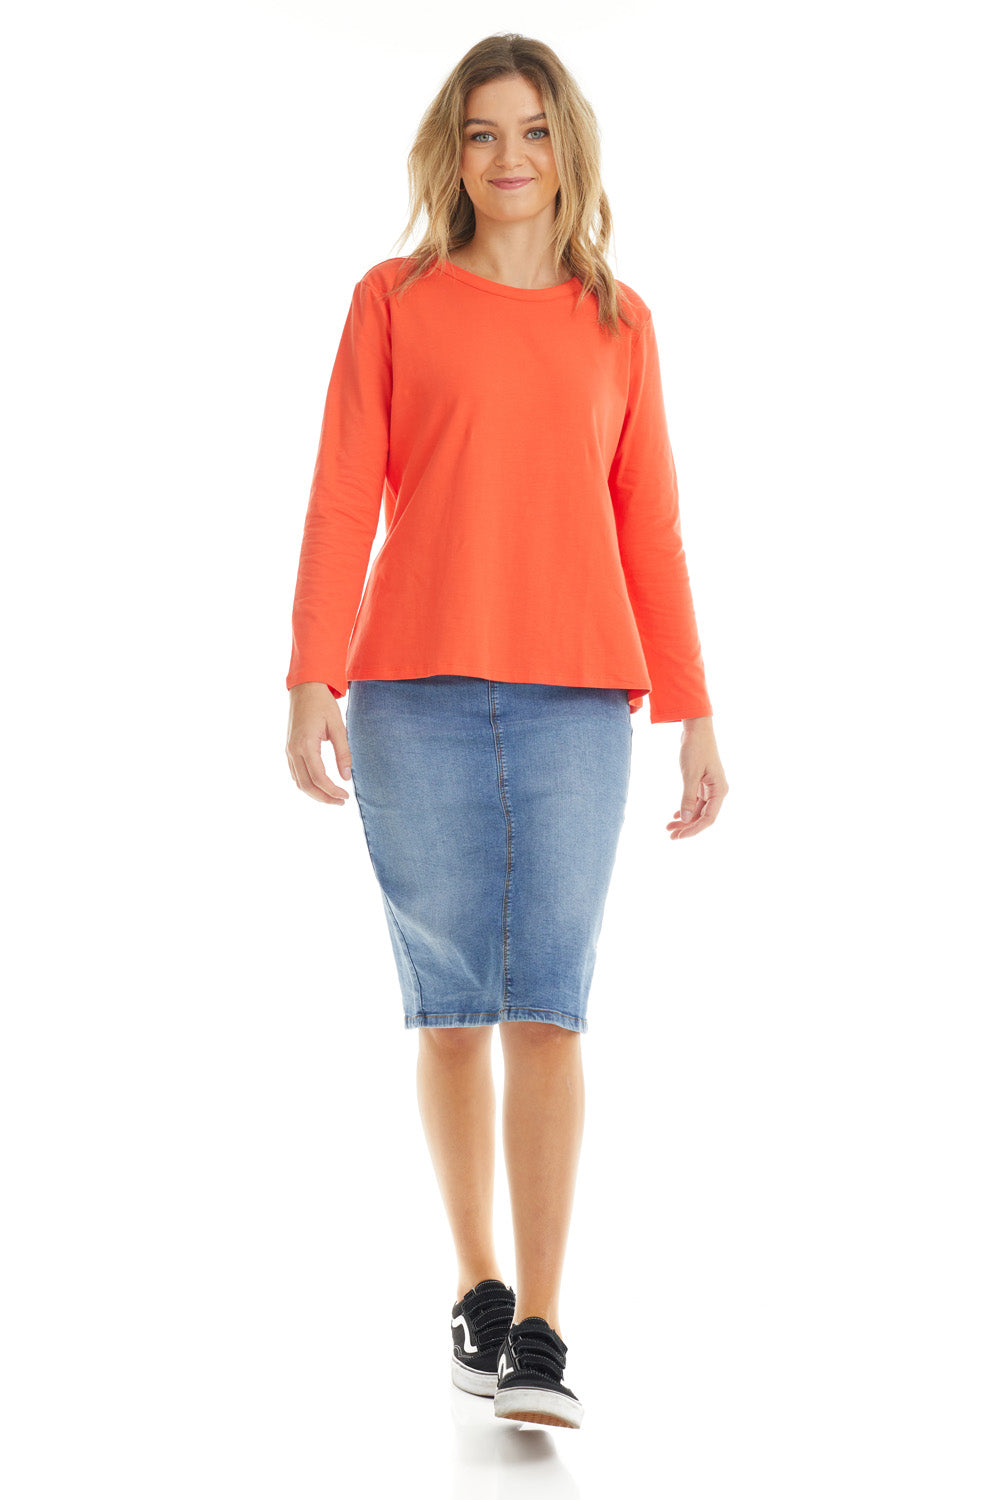 orange cotton long sleeve top for women